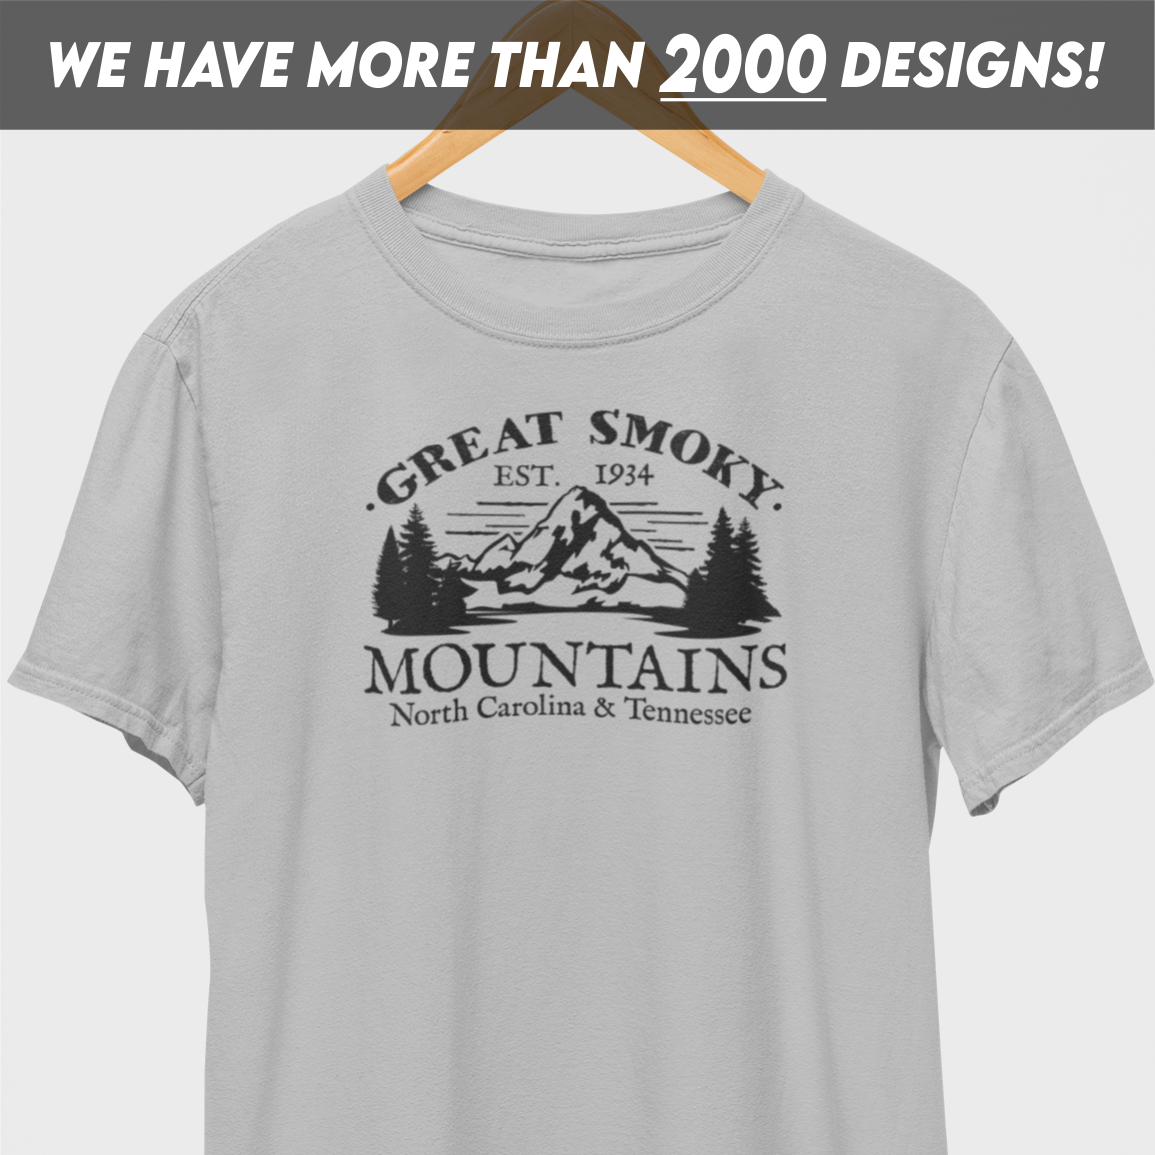 Great Smoky Mountains Vintage Black Print T-Shirt